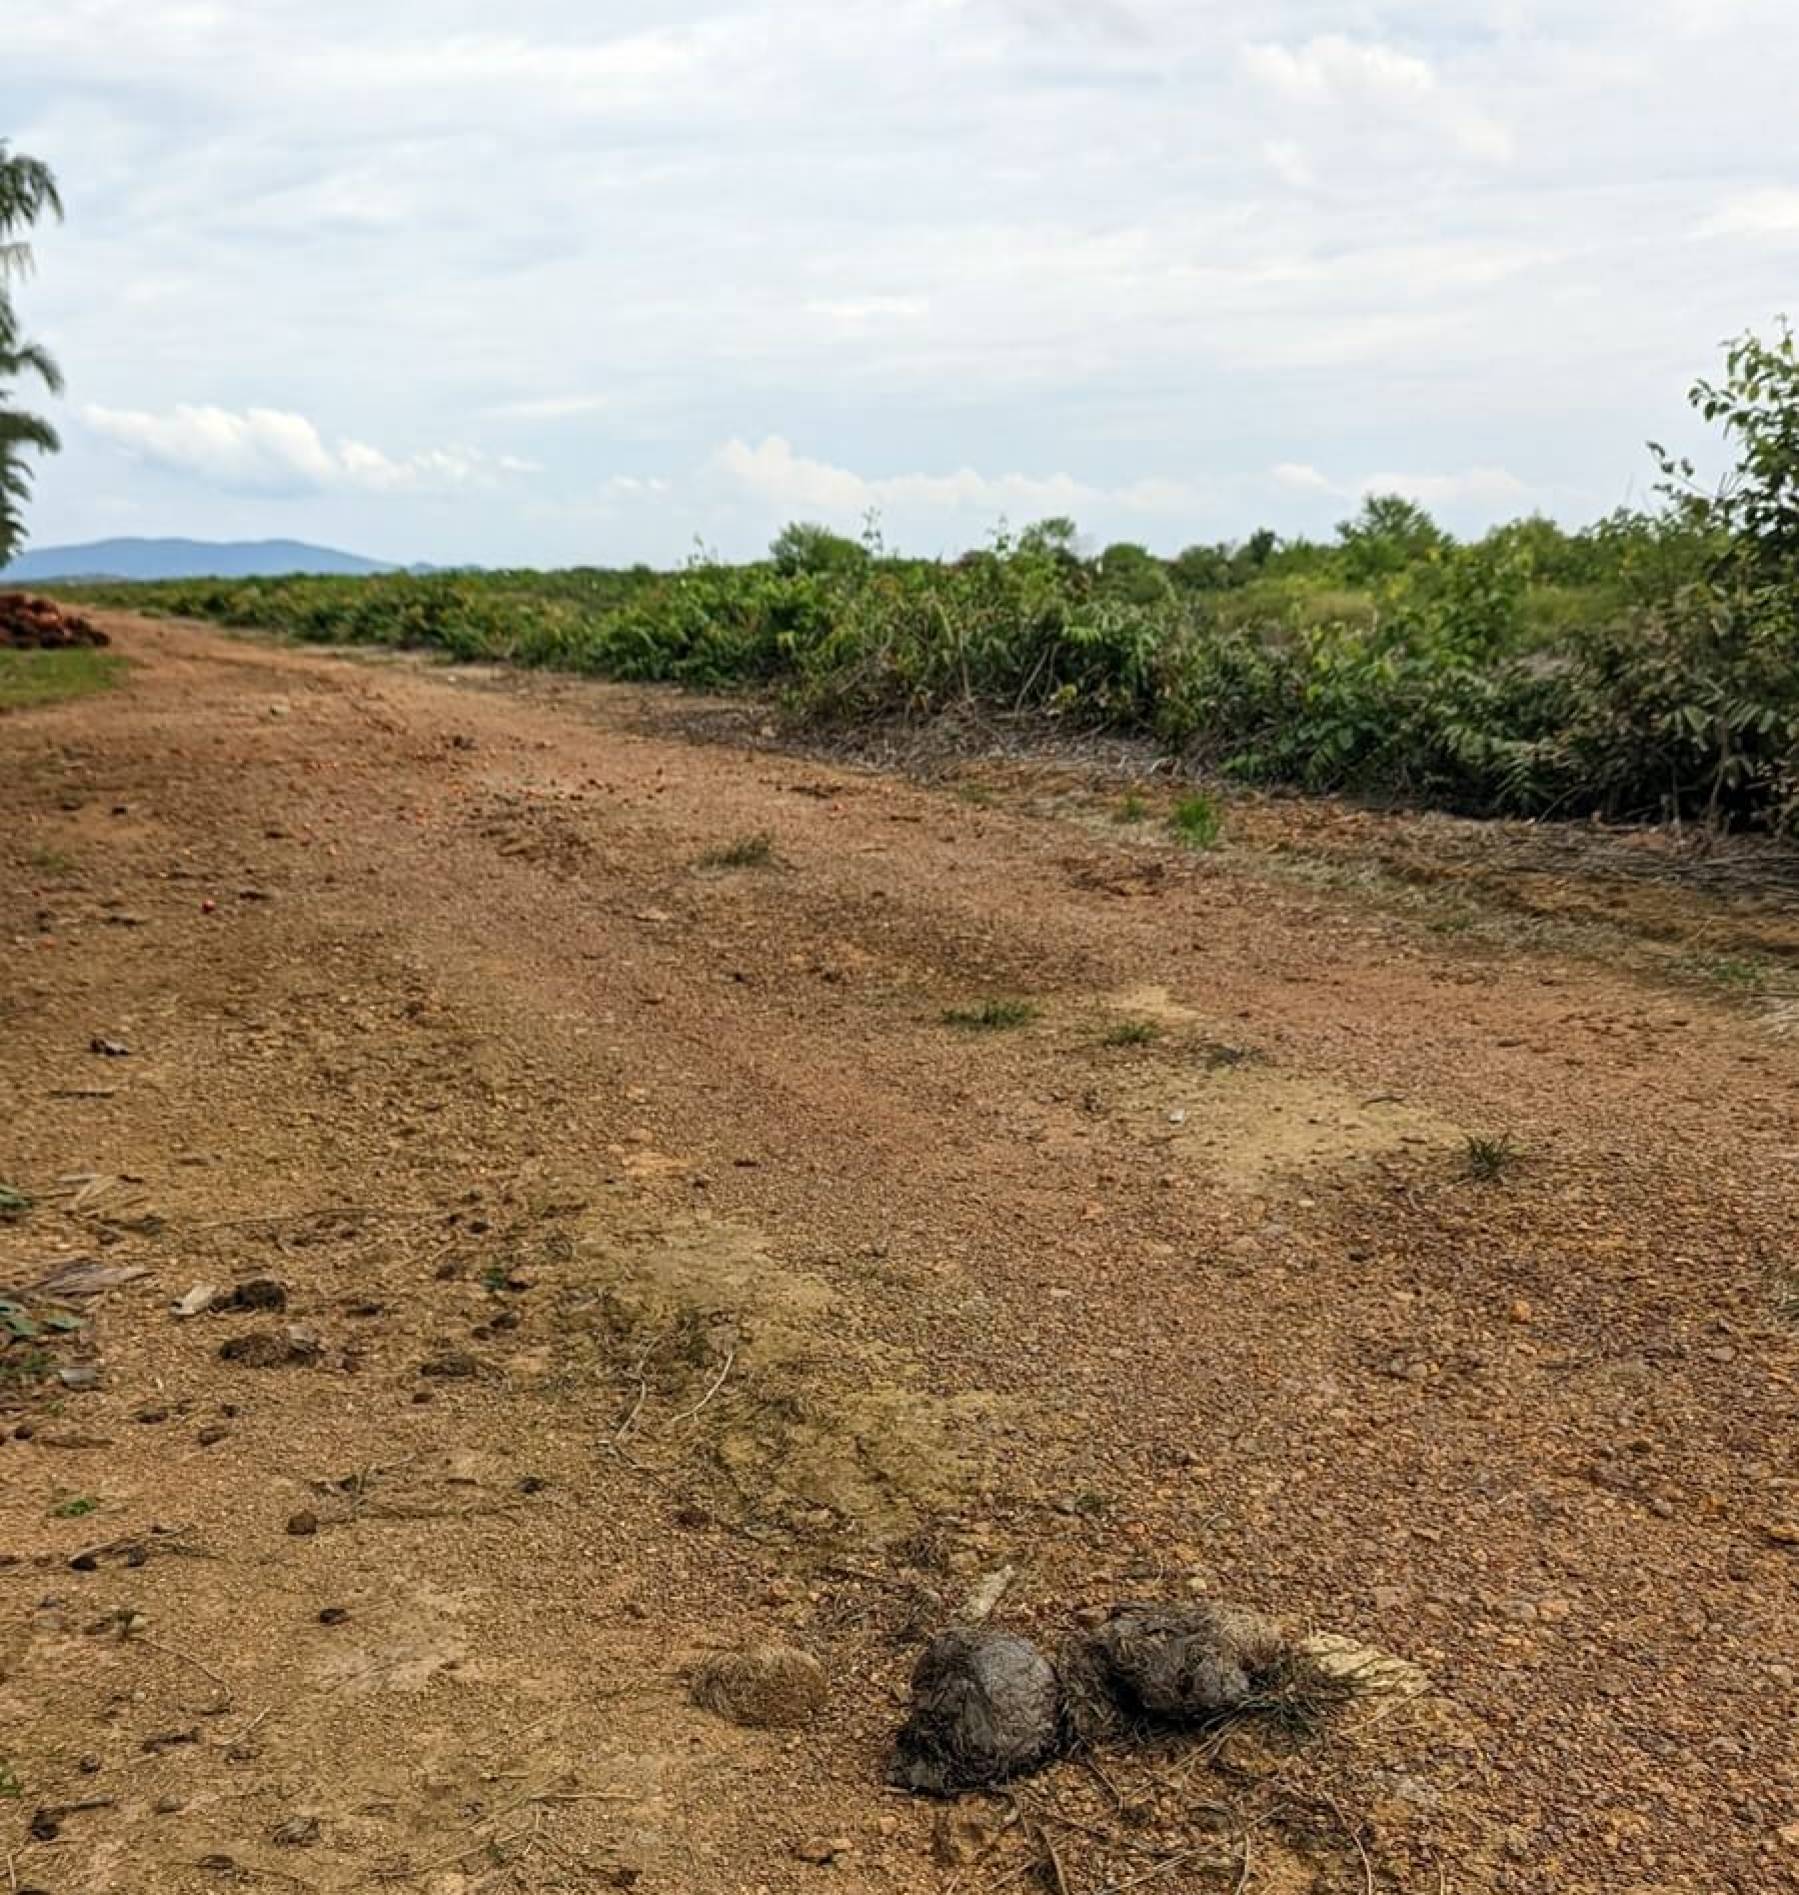 Elephant dung near the site, a telltale sign of their increased presence. Photo: Macaranga Media